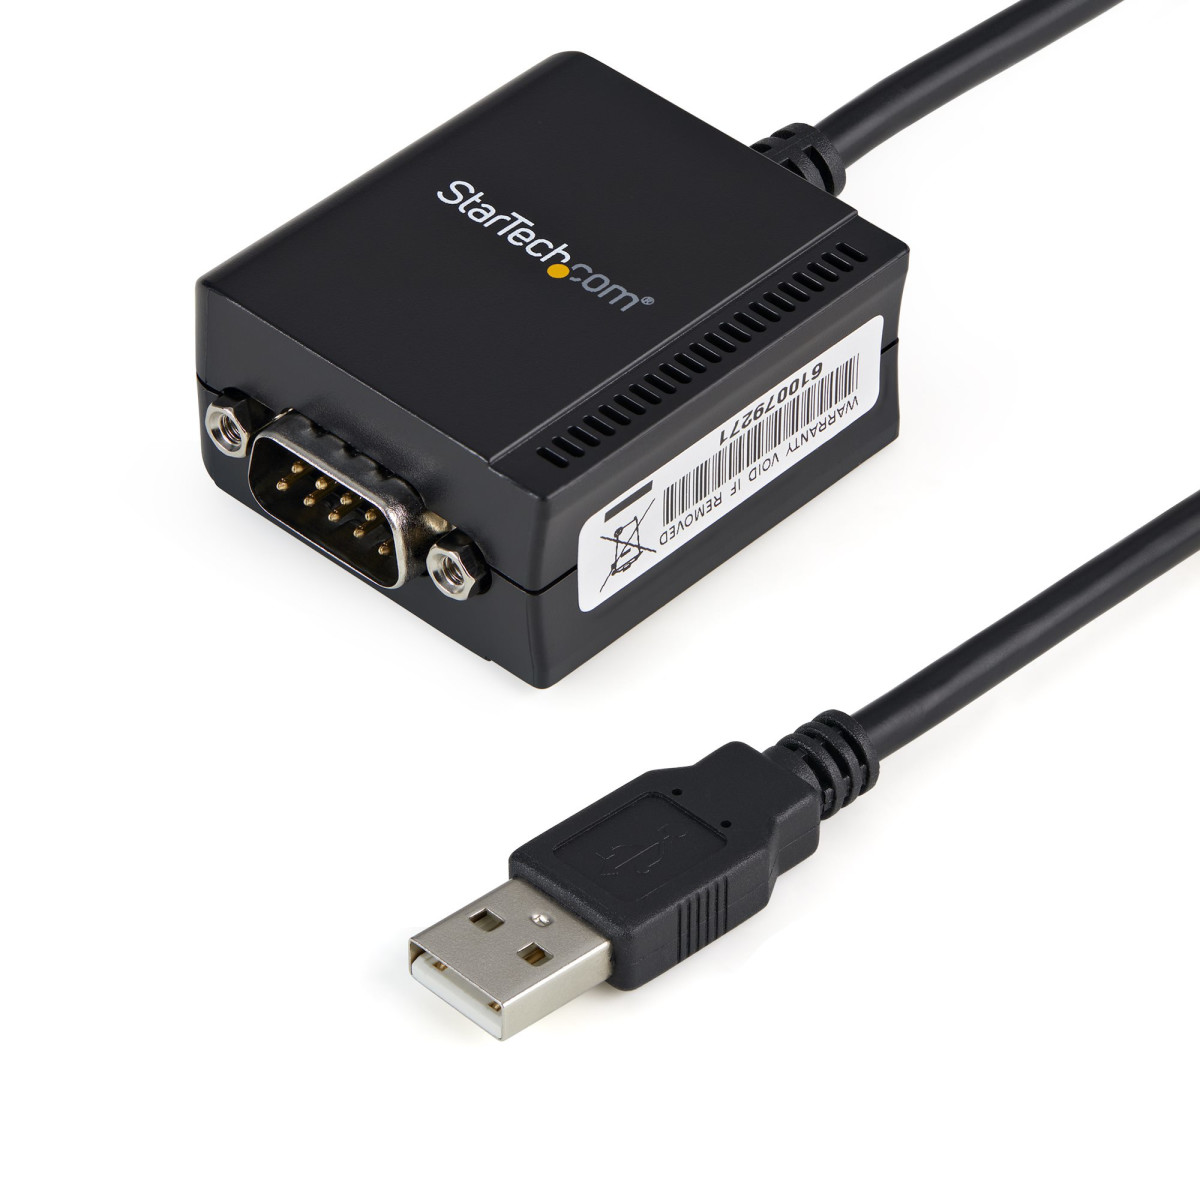 1Port USB-RS21 USB-RS232 Adpt Cable